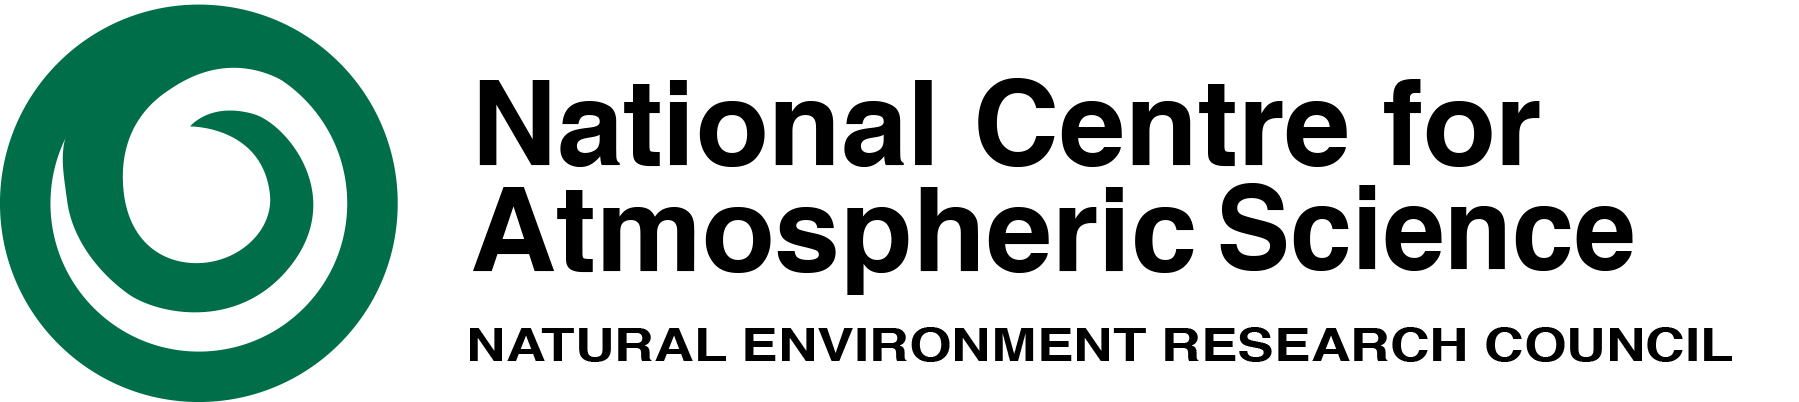 NCAS logo RGB.png